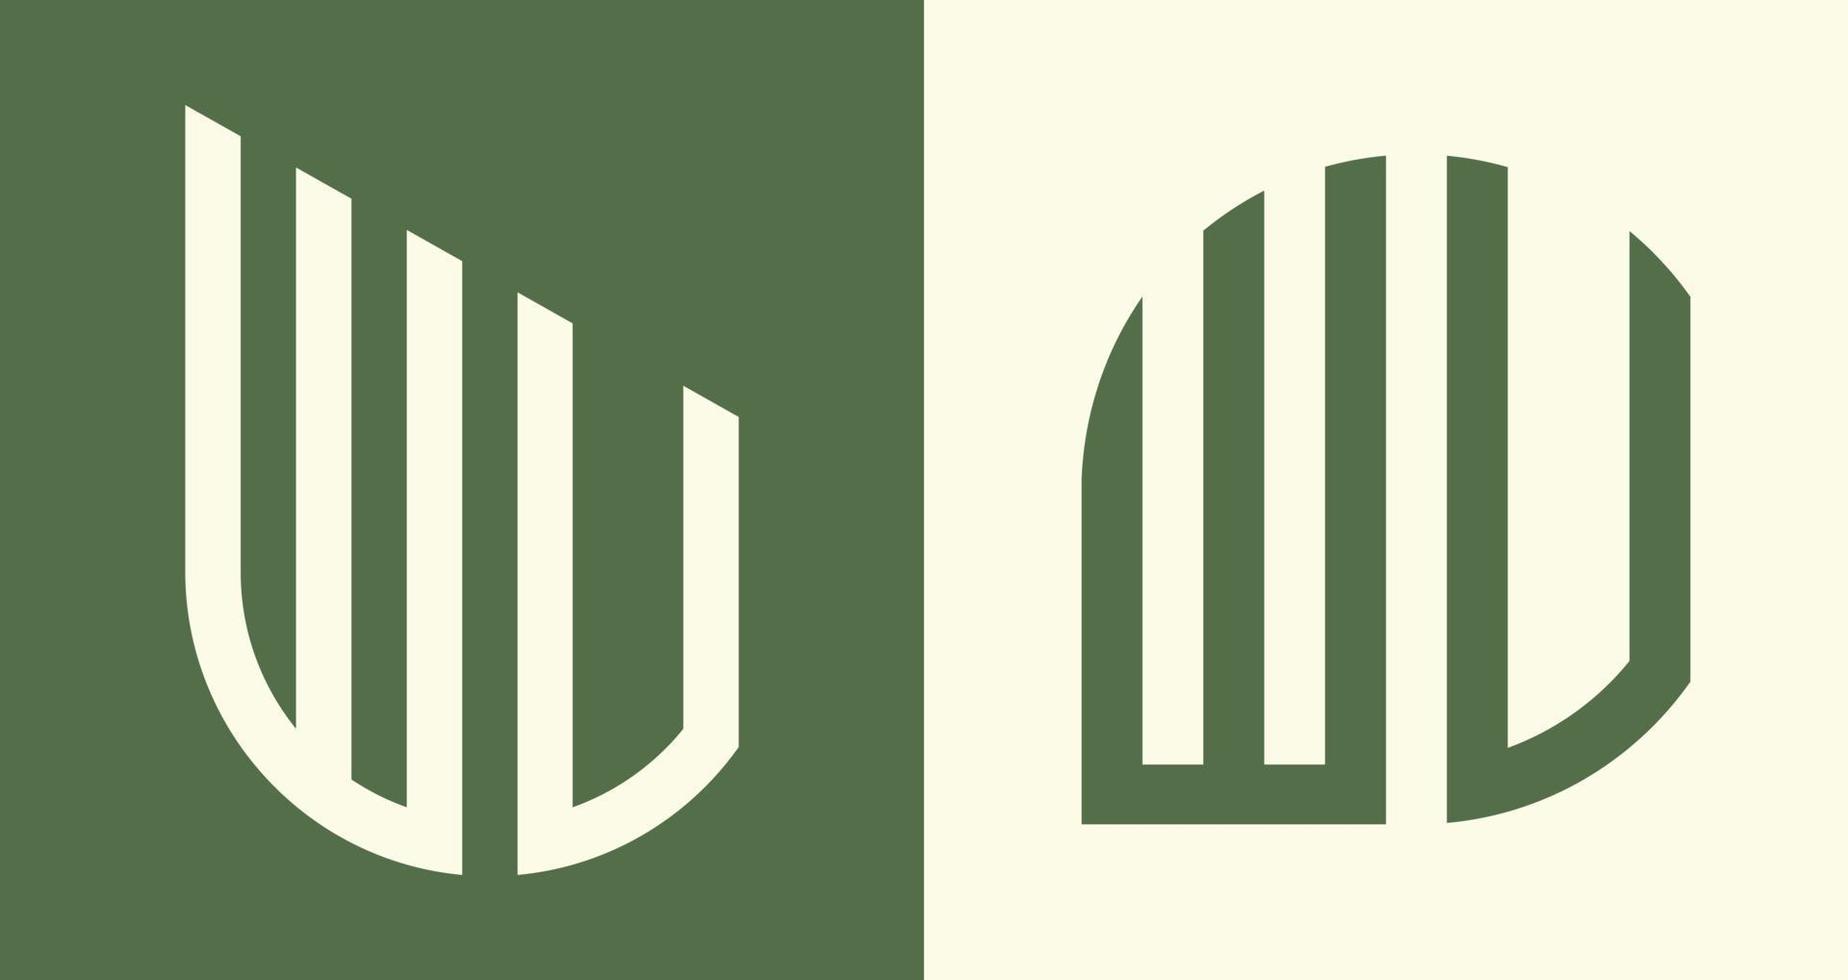 Creative simple Initial Letters WV Logo Designs Bundle. vector